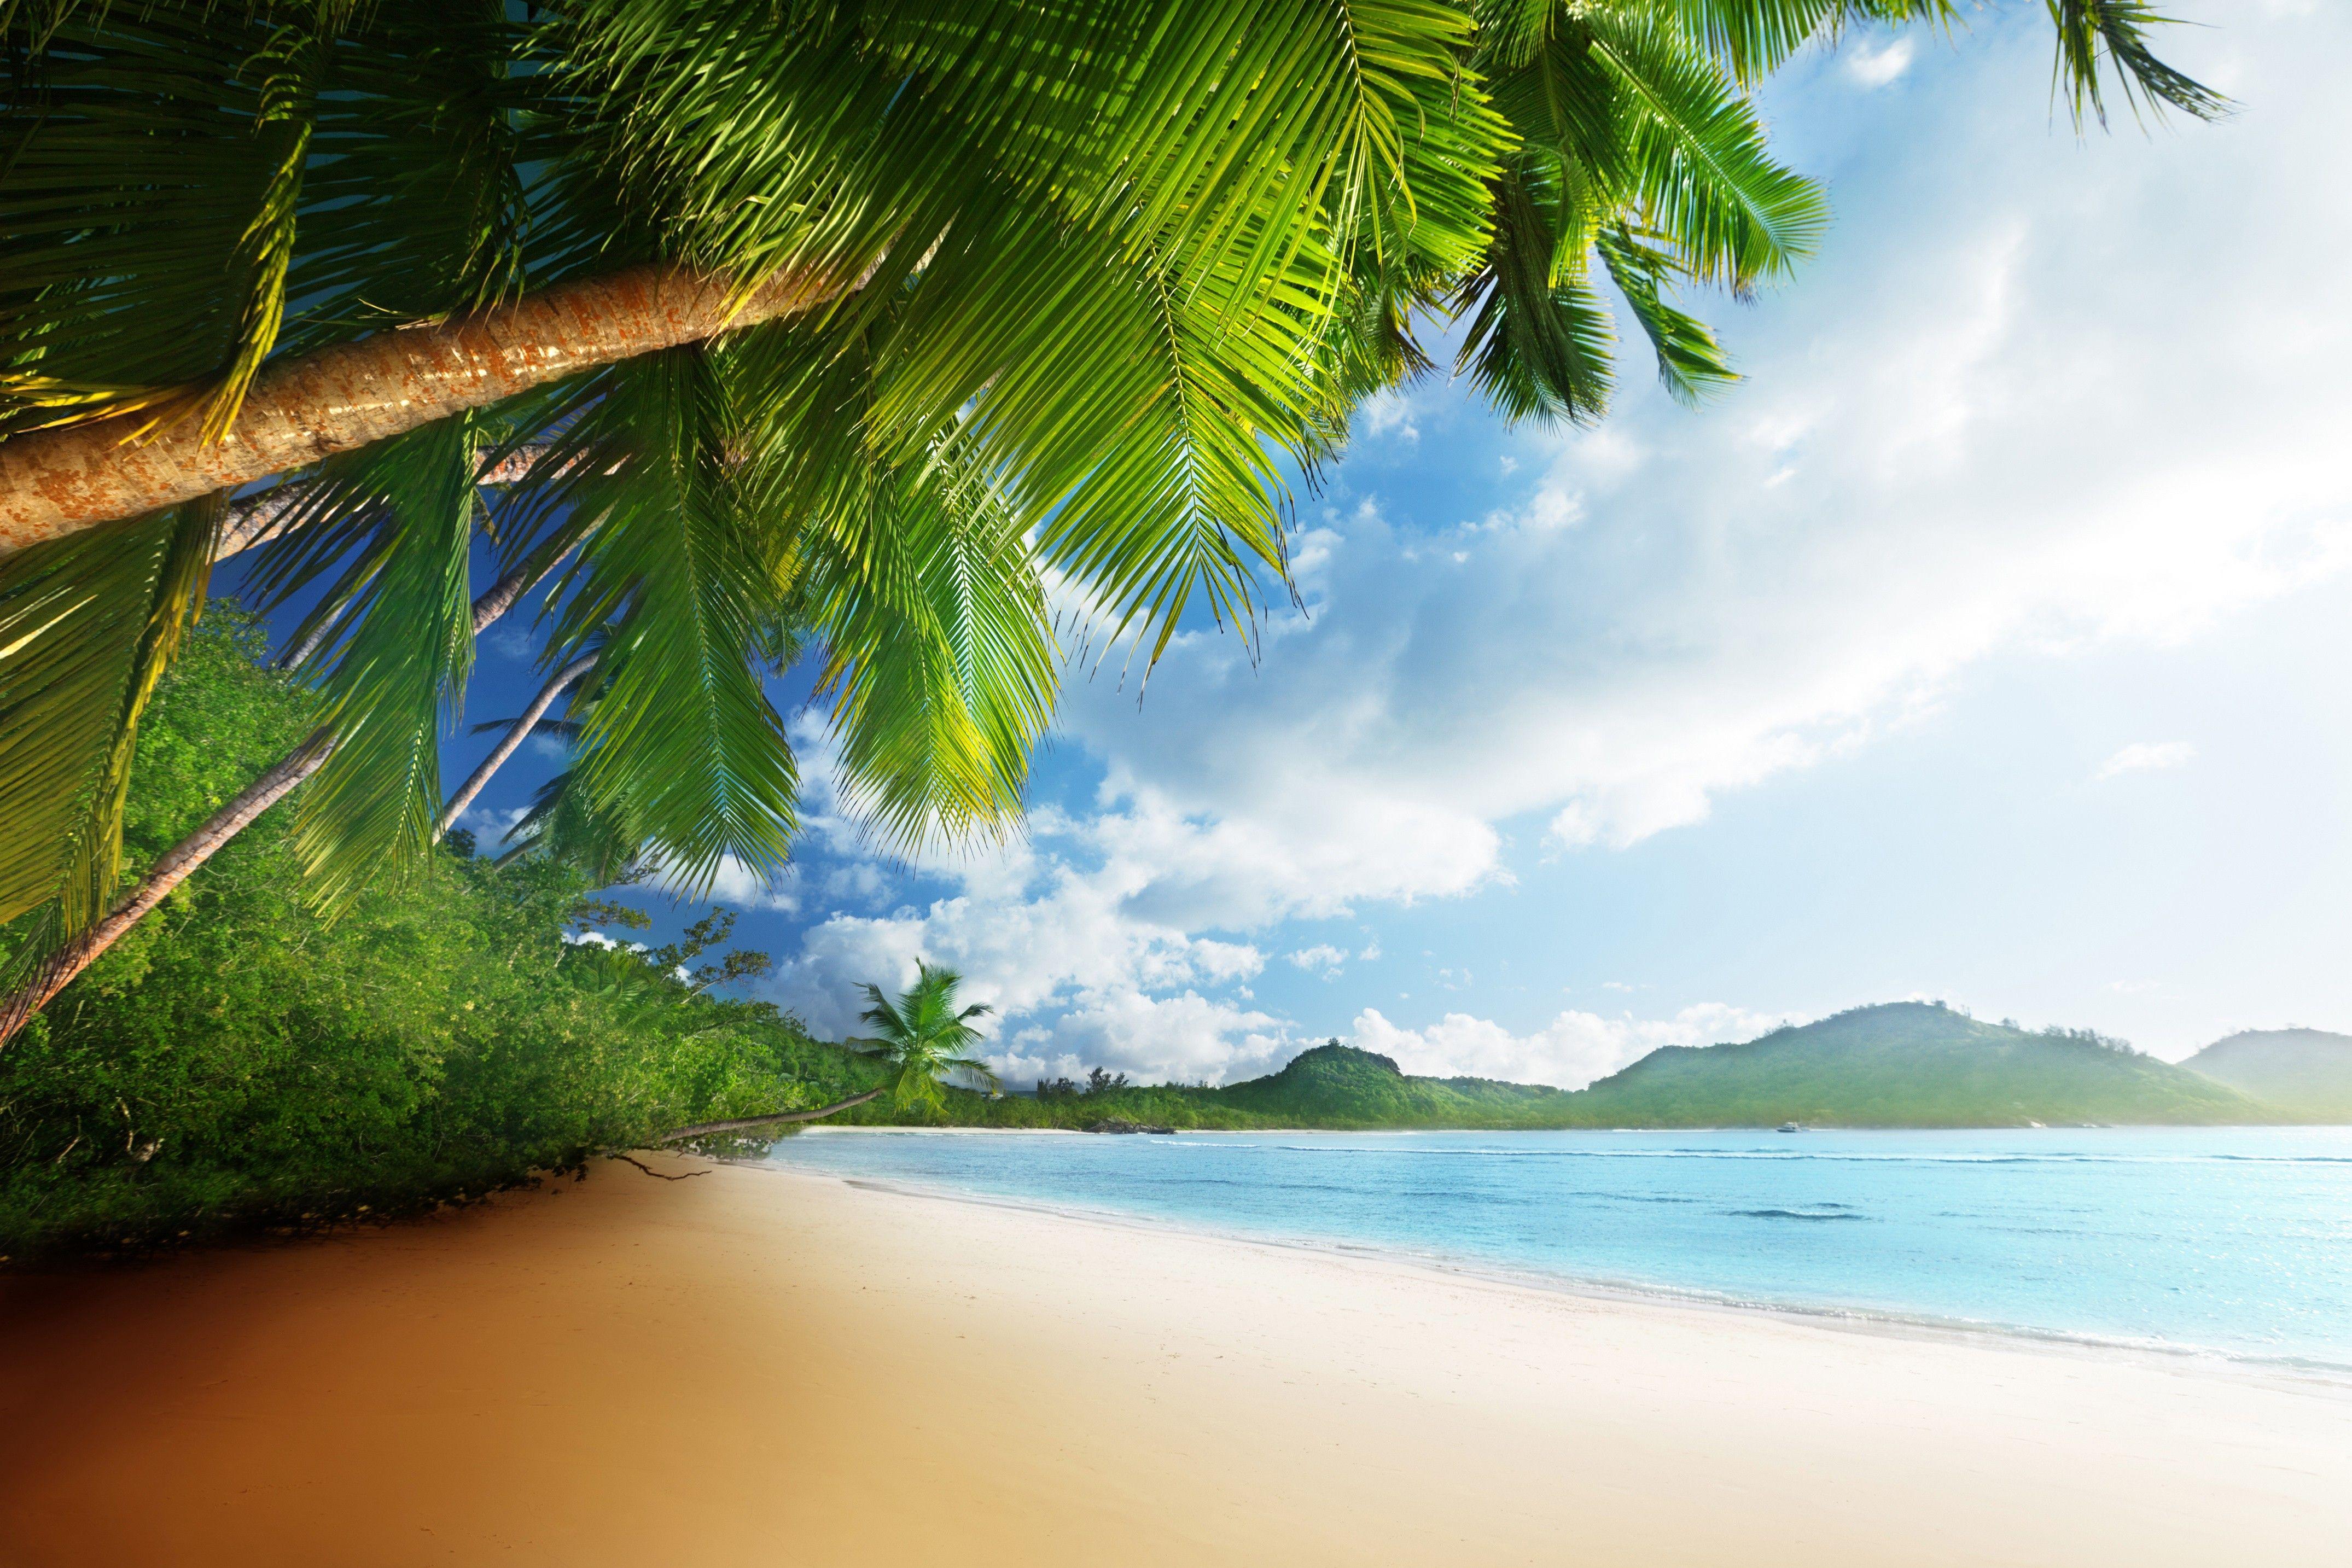 Tropical Paradise Desktop Wallpapers - Top Free Tropical Paradise ...